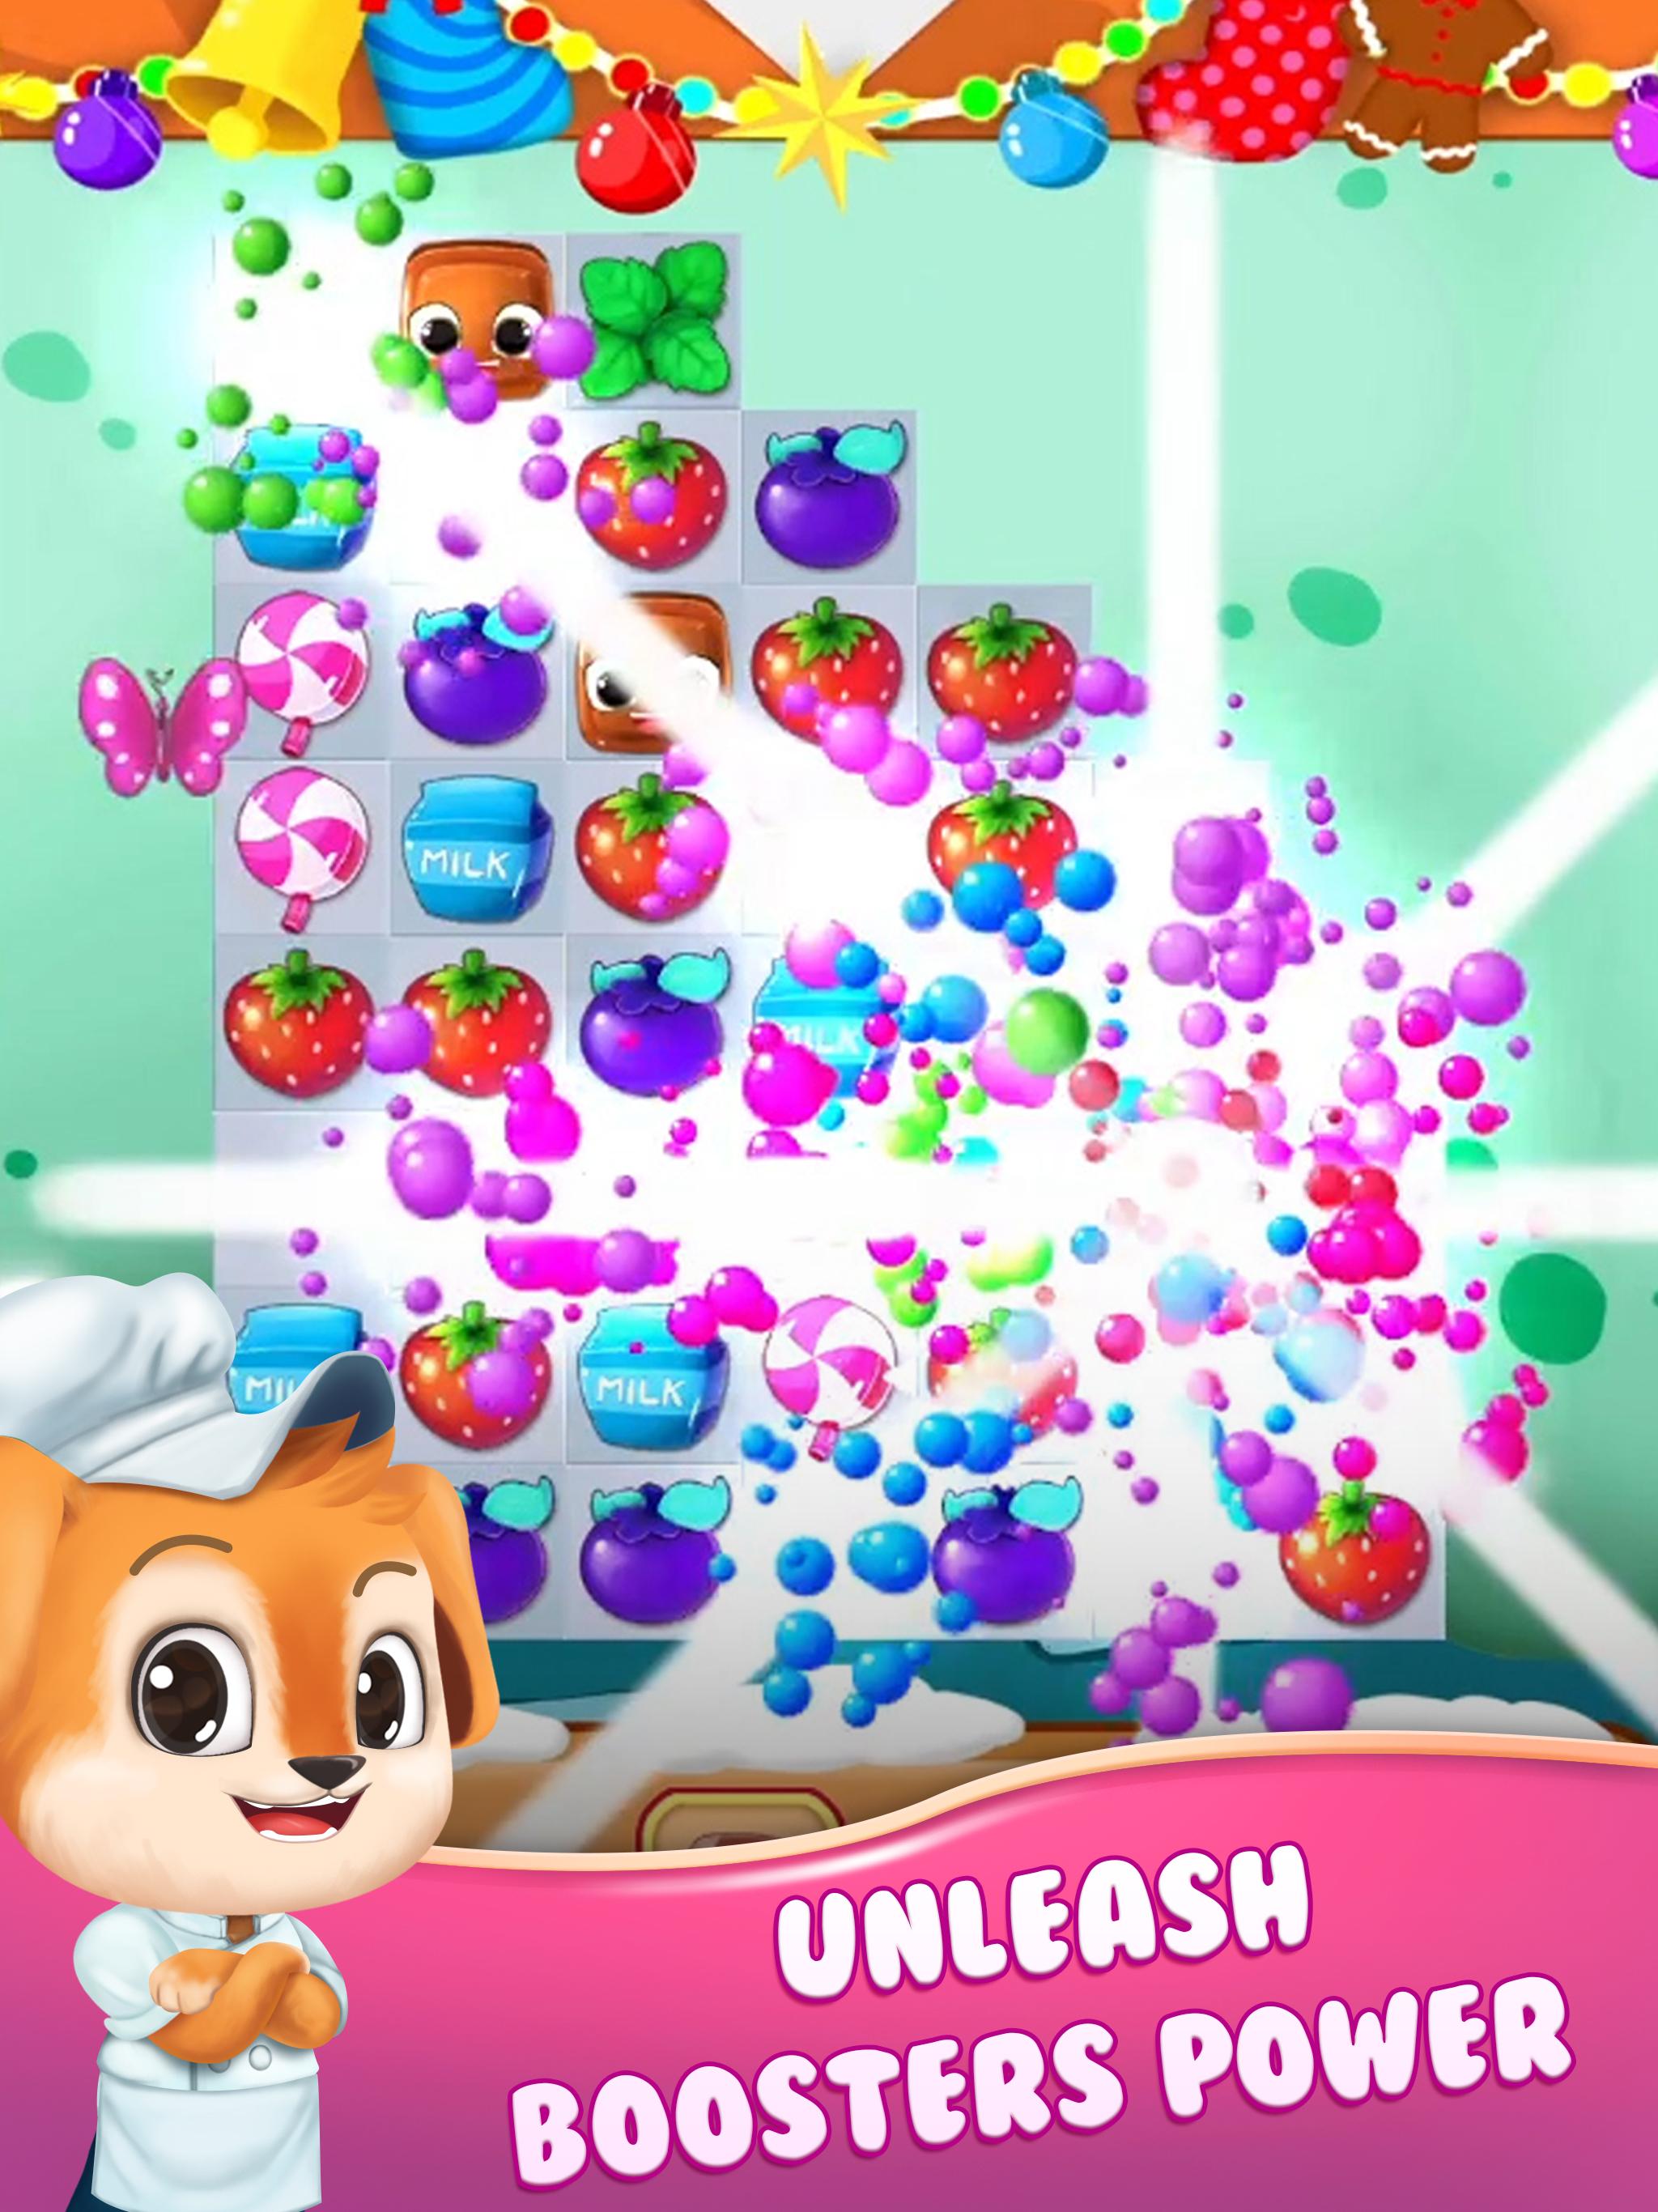 Cake Crush Link Match 3 Puzzle Game 1.2.1 Screenshot 9